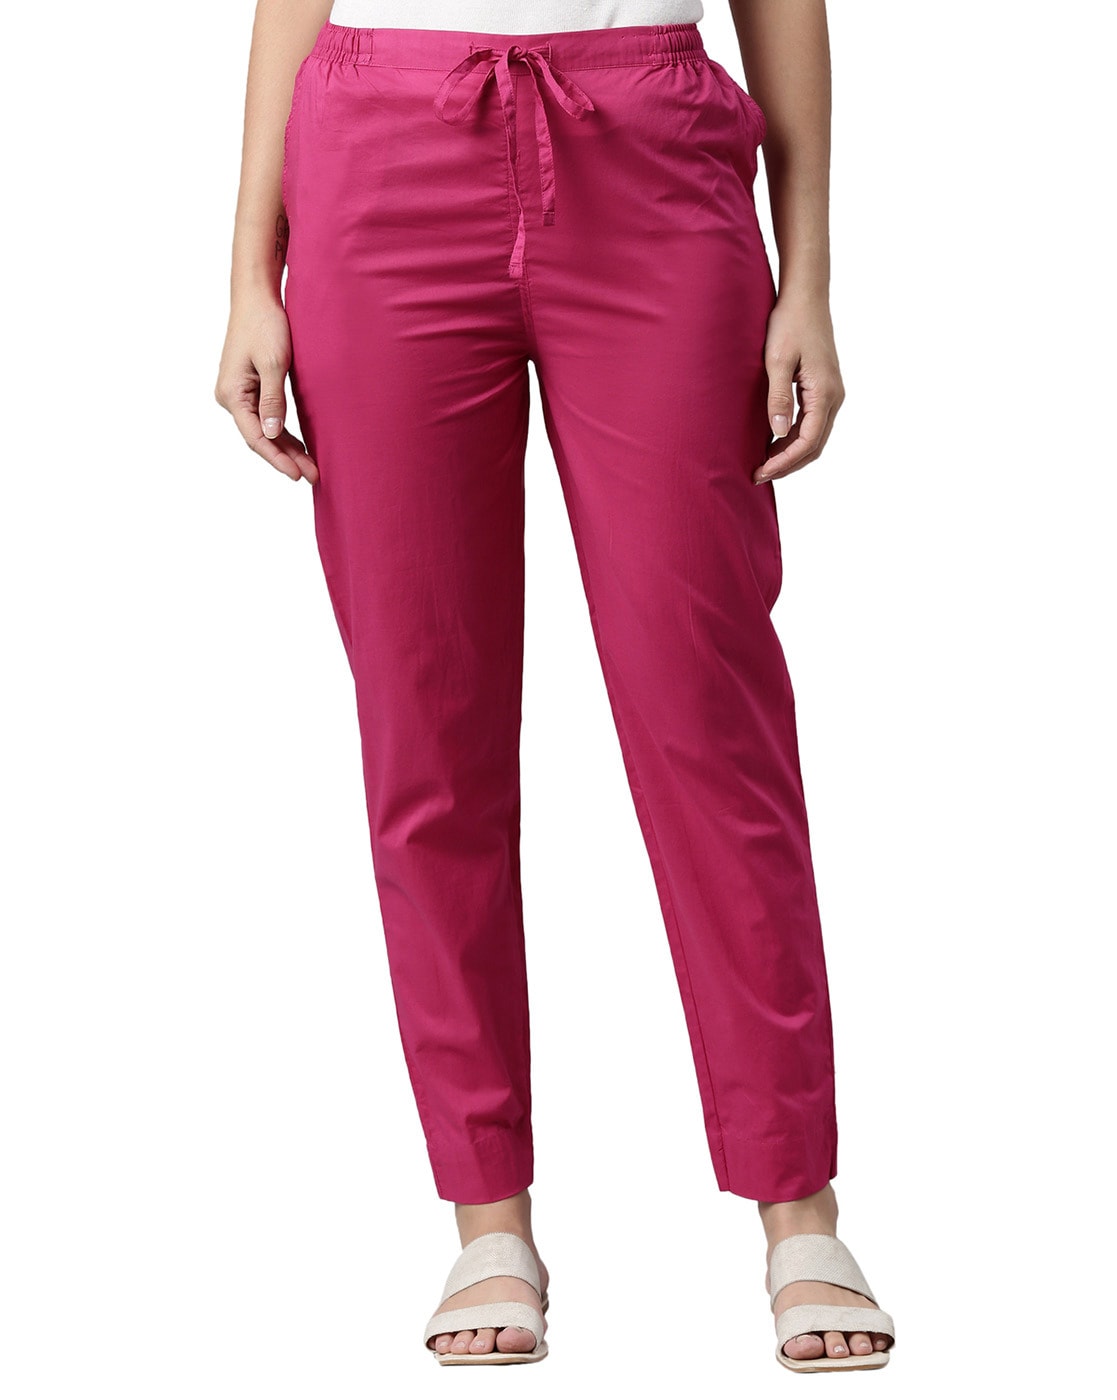 Buy Dark Pinks Pants for Women by GO COLORS Online